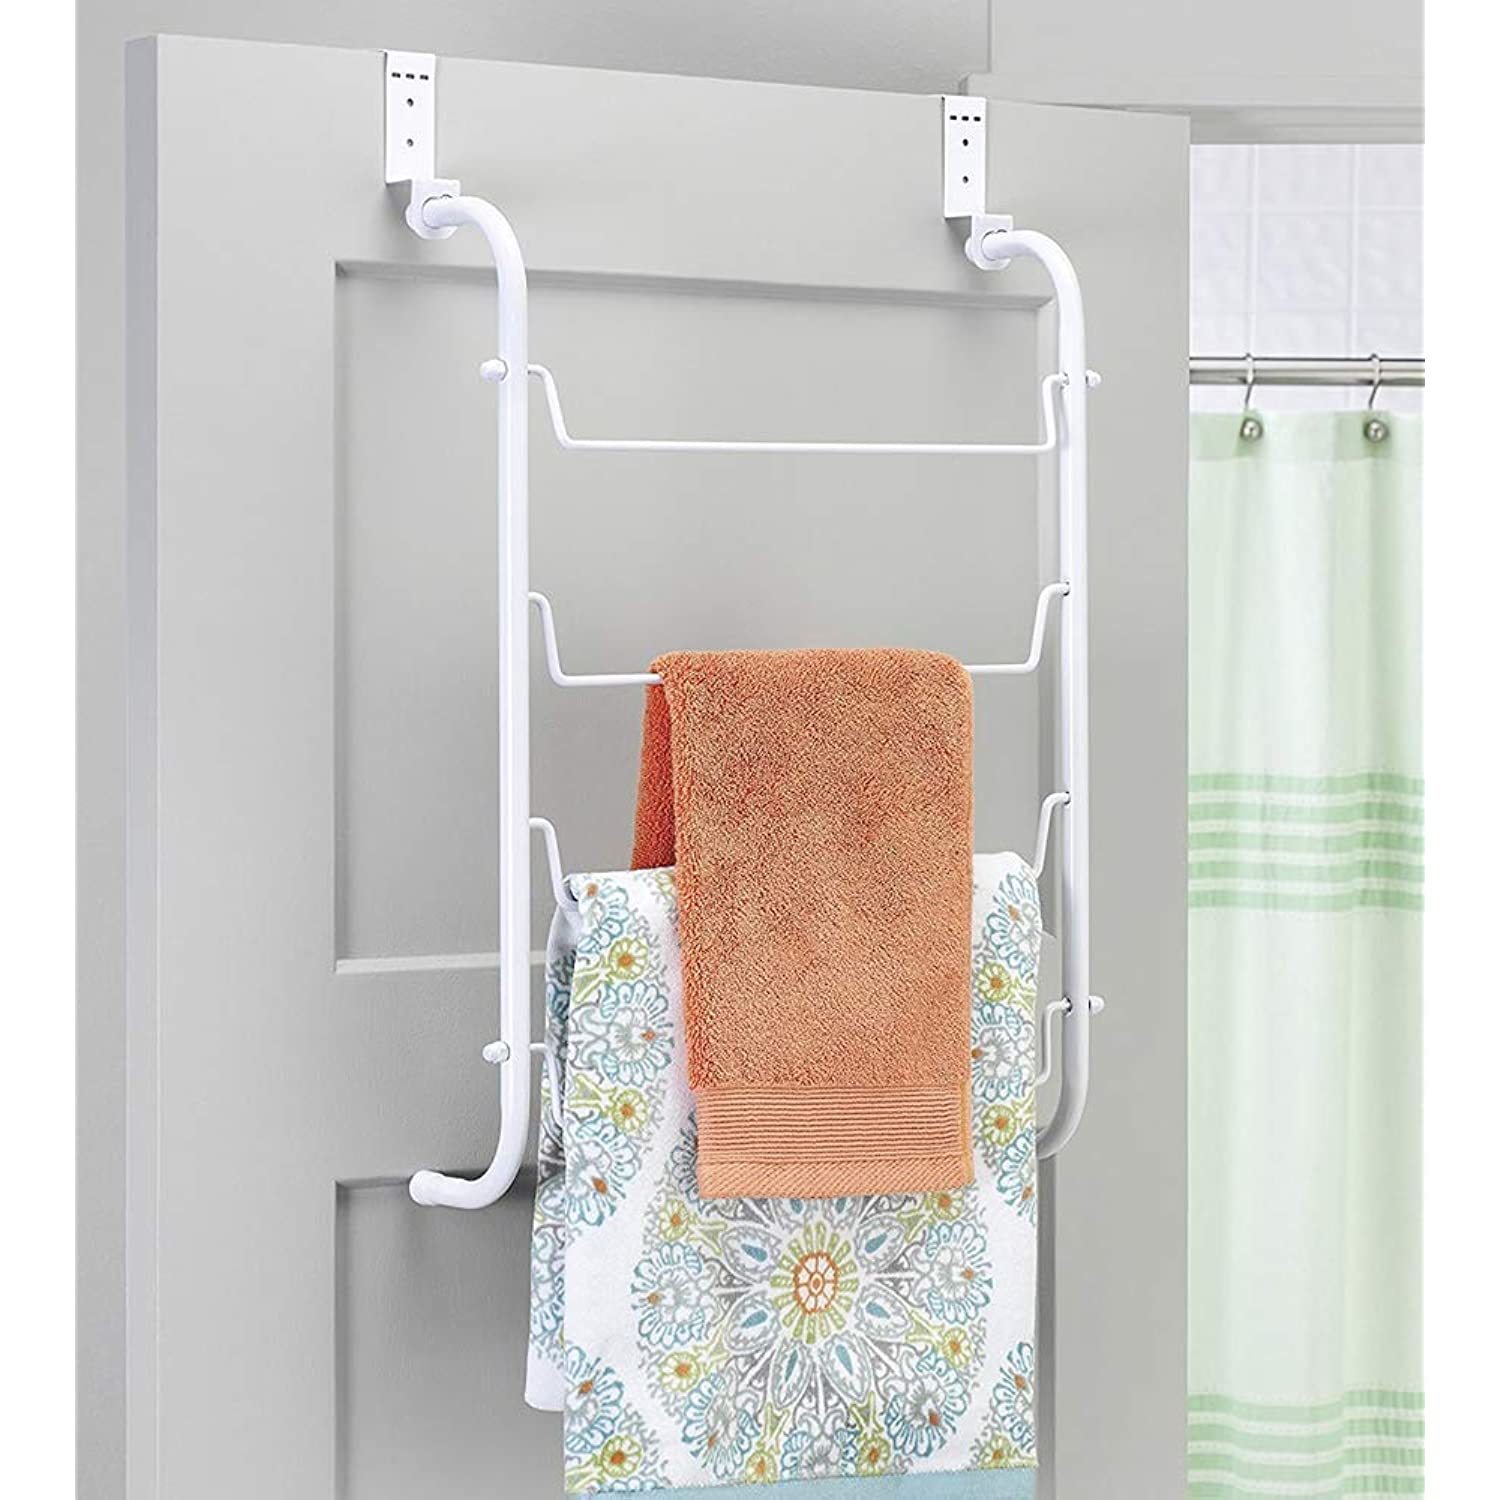 Primary image for Whitmor Over The Door, White Towel Rack, Medium